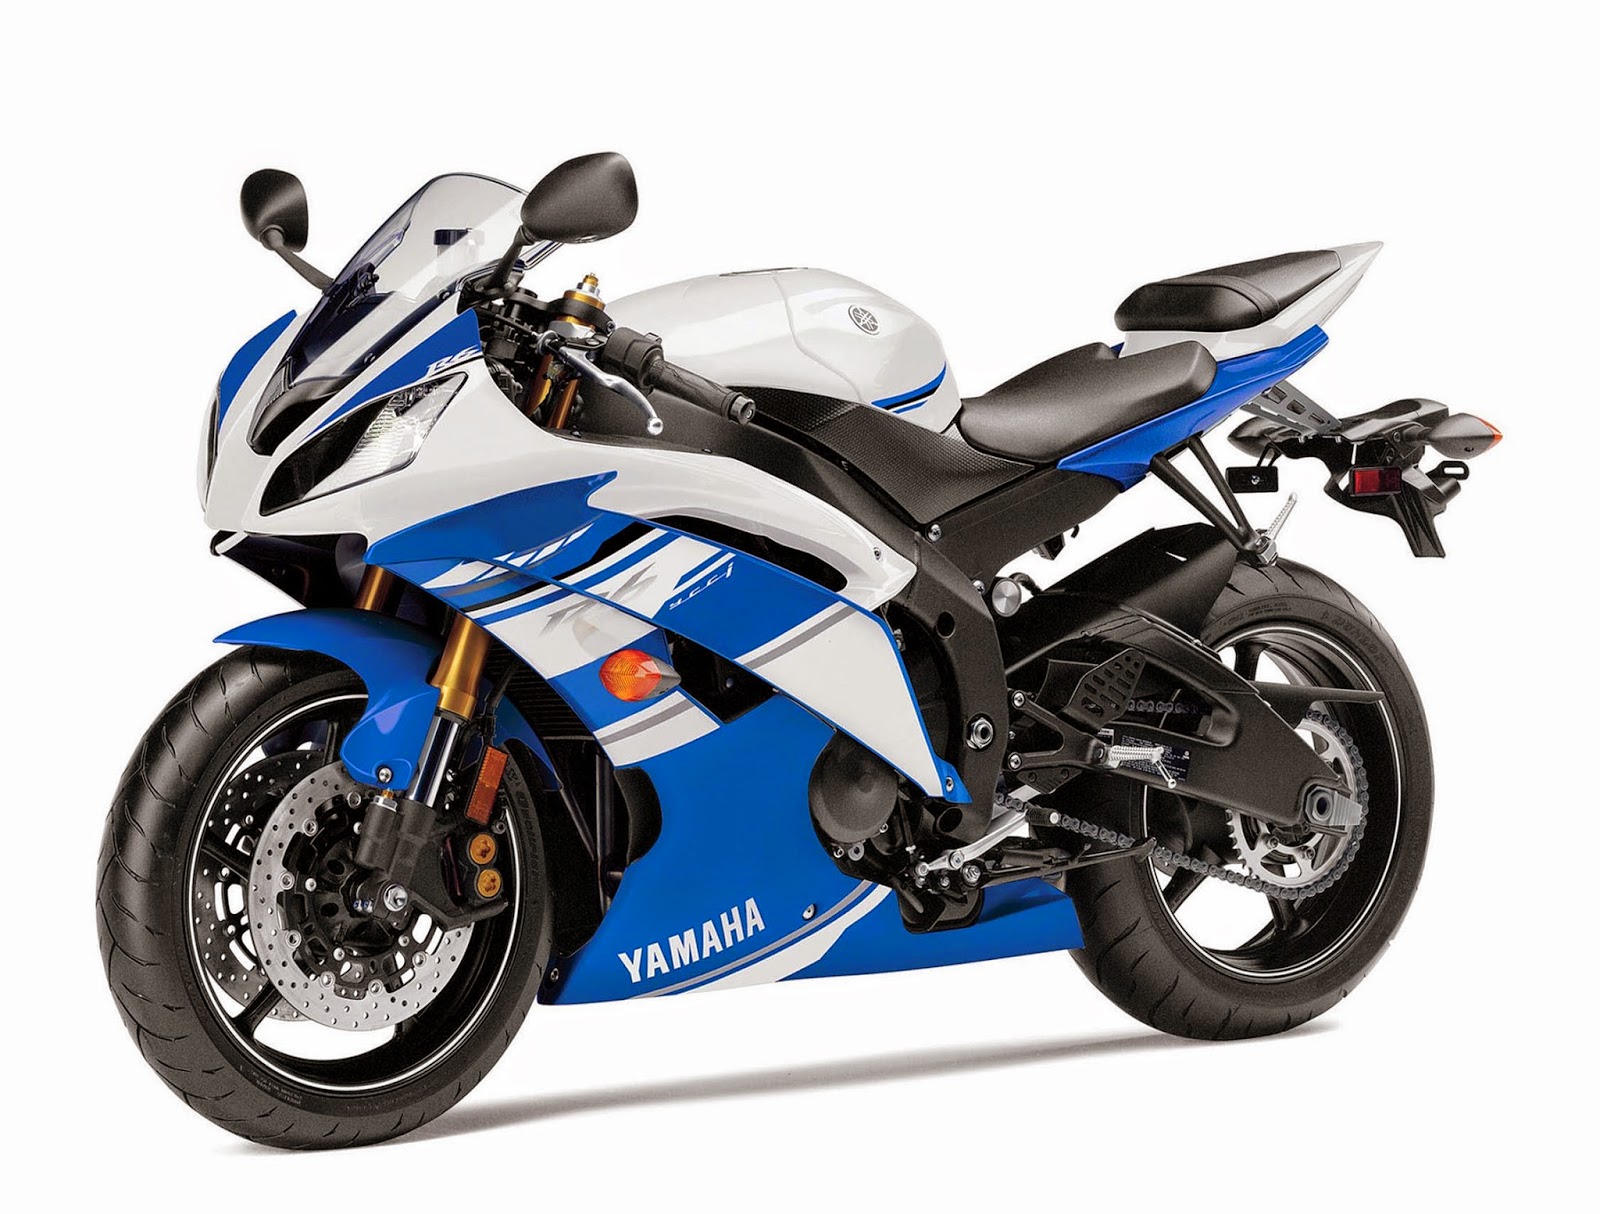 FOTO YAMAHA YZF-R6 2015 Spesifikasi Motor Yamaha Model 